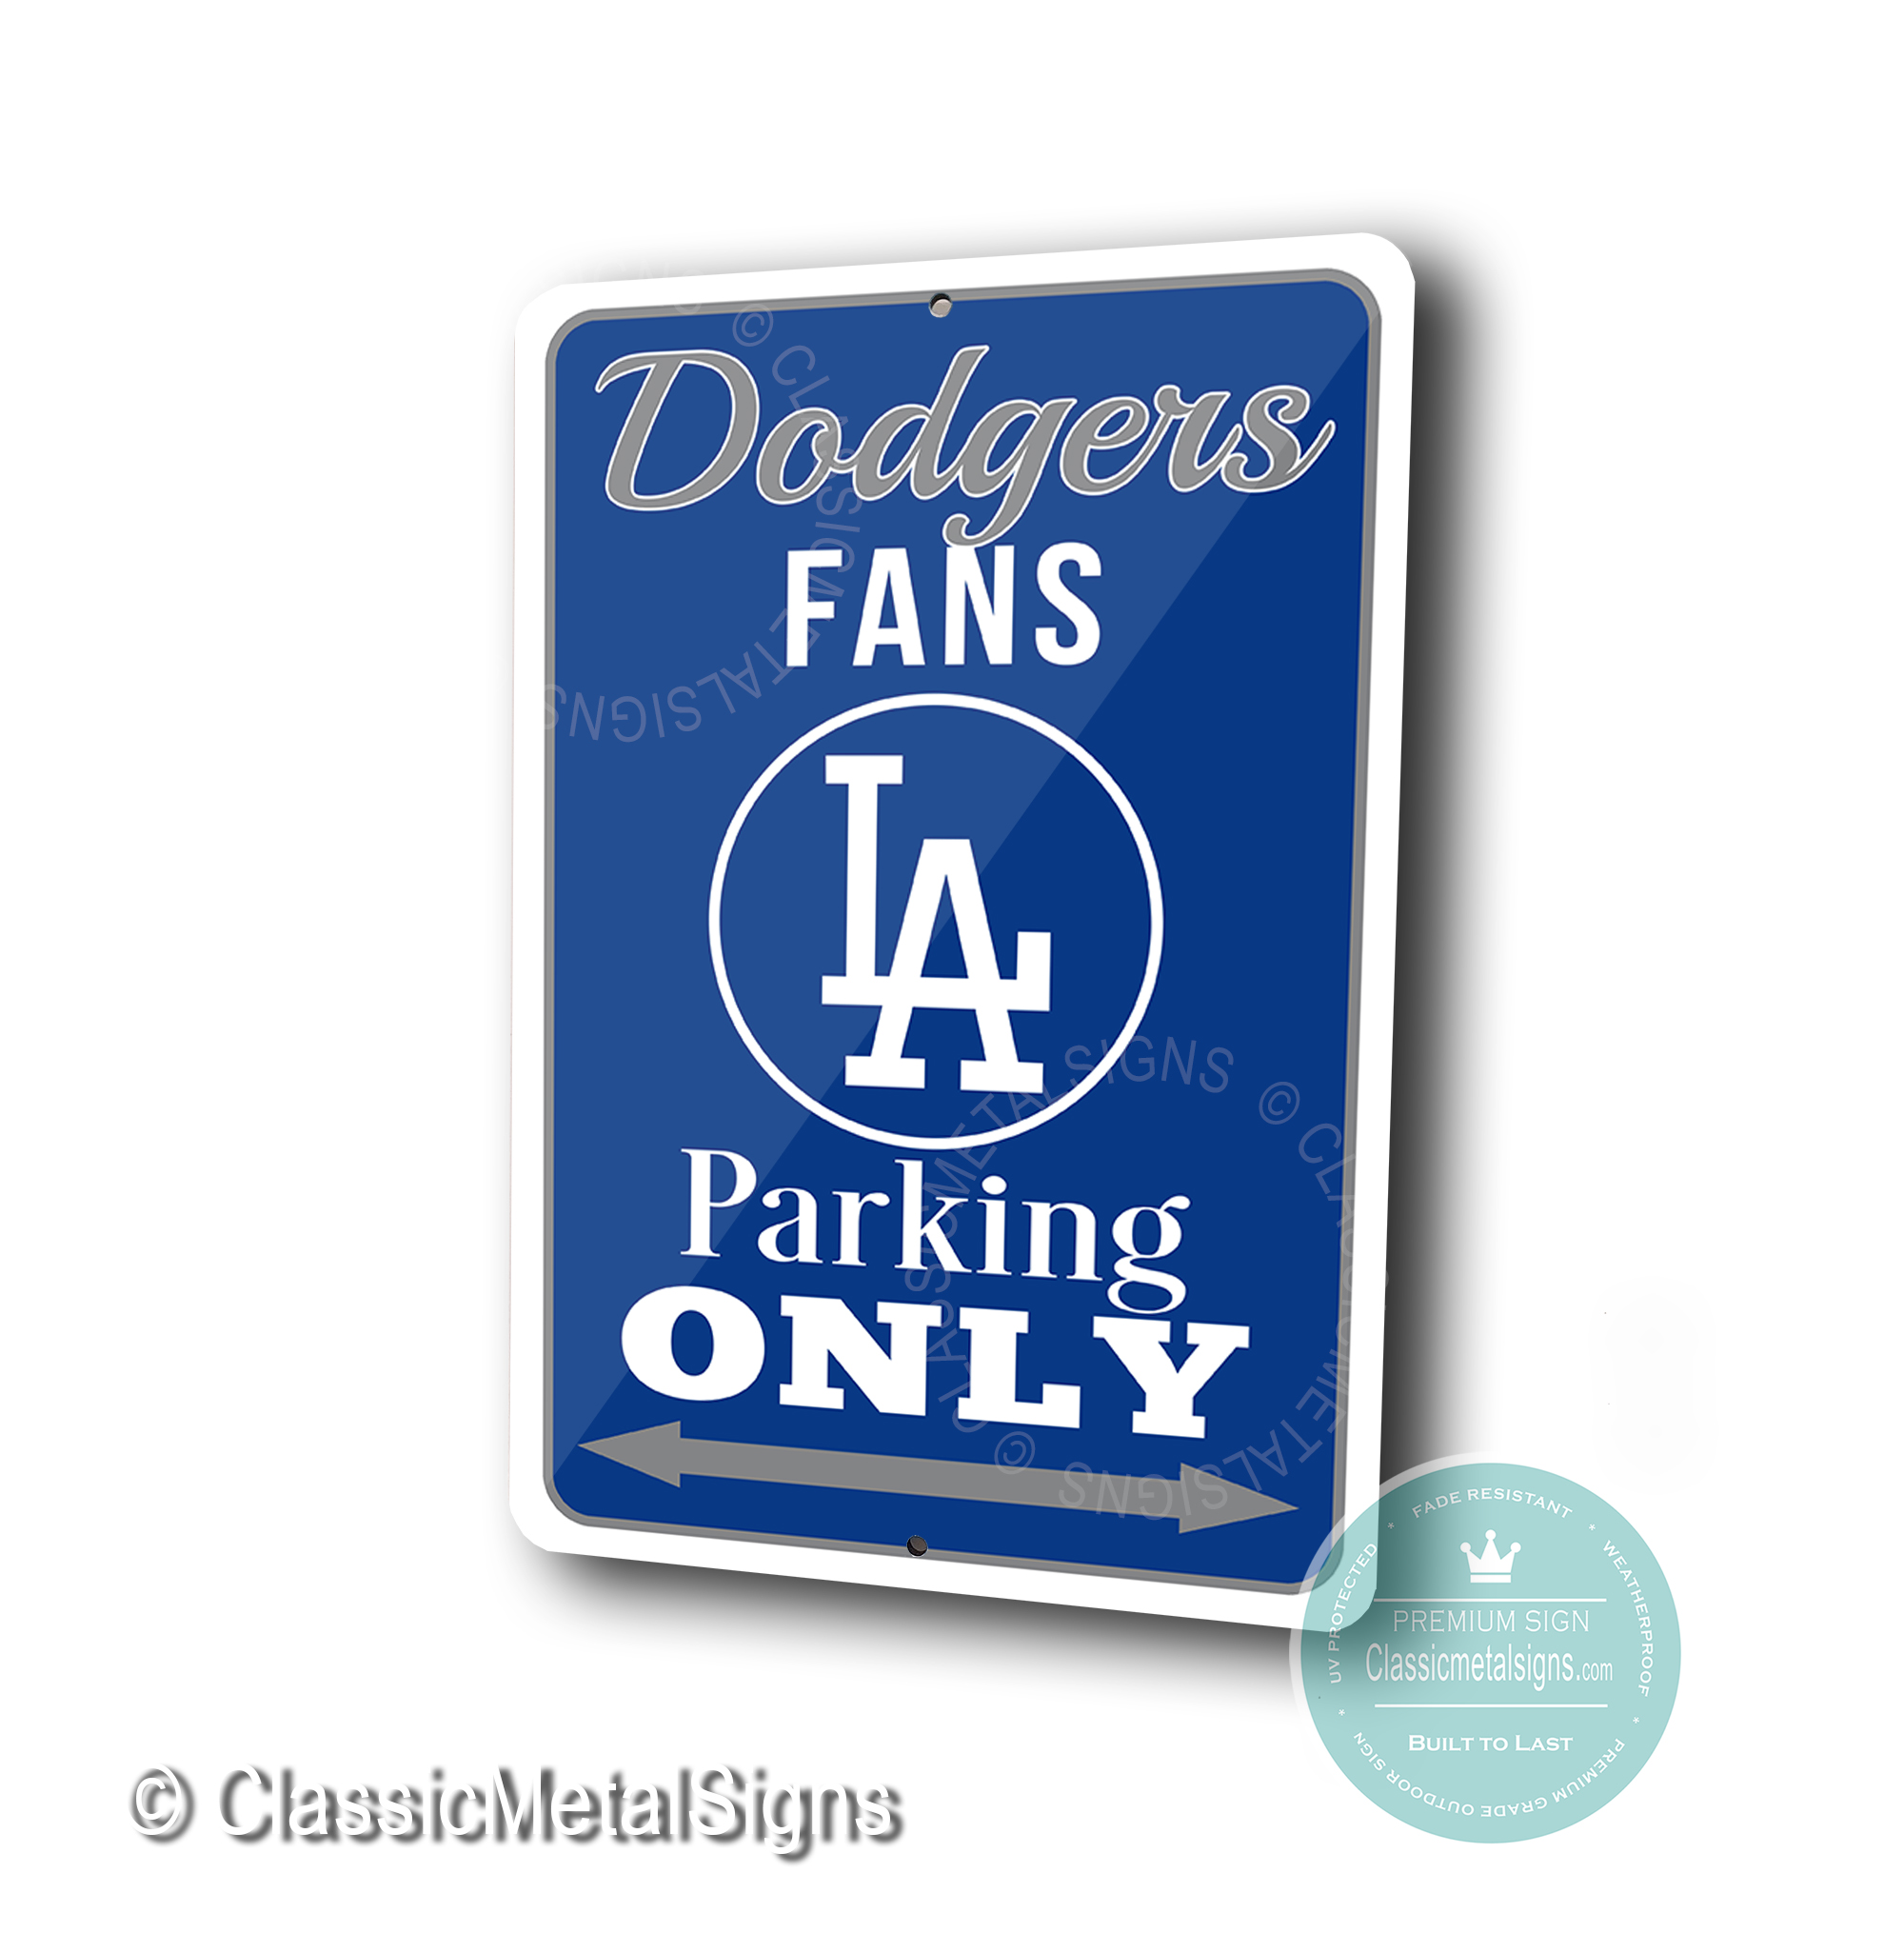 LA Dodgers Parking Only signs